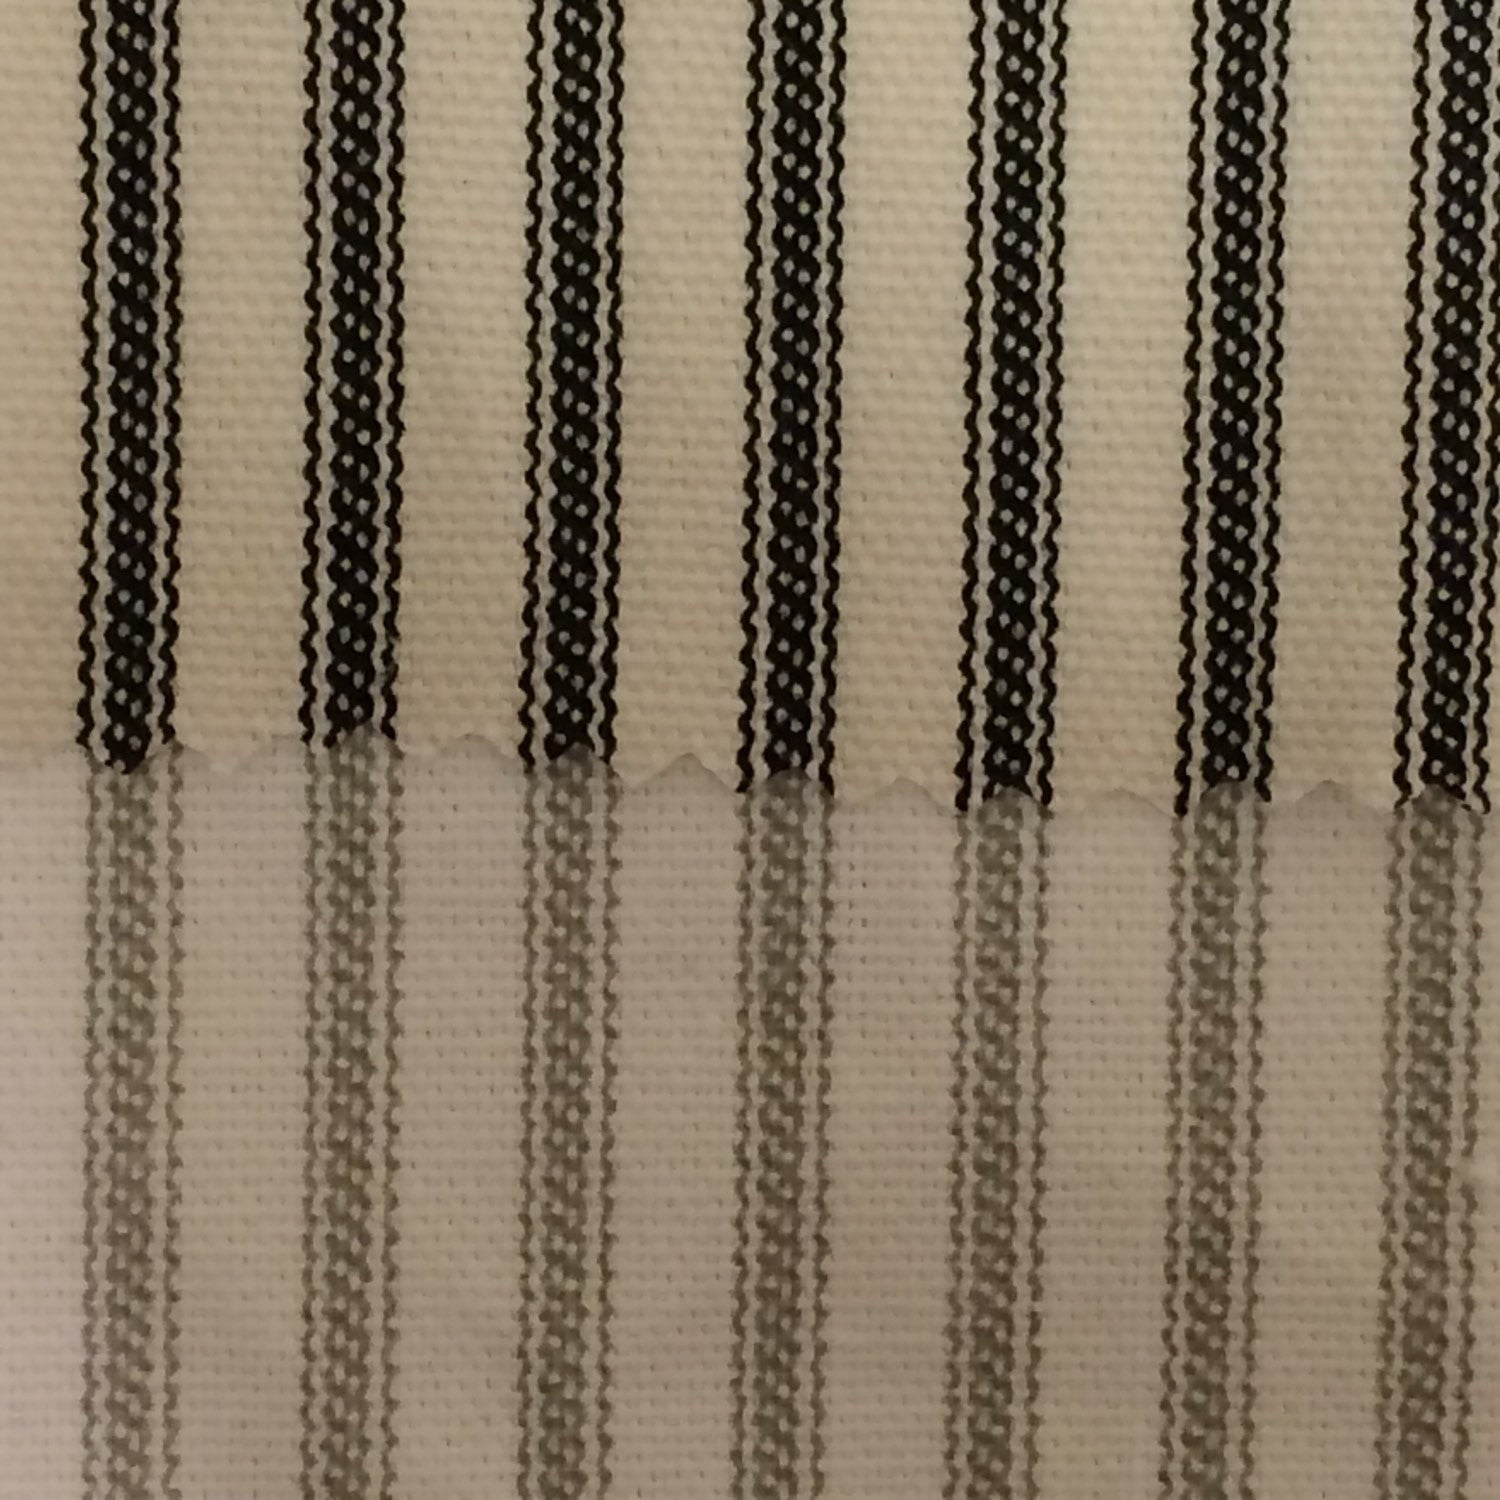 Black Ticking Stripe Throw Pillow Cover 18x18 – Southern Ticking Co.